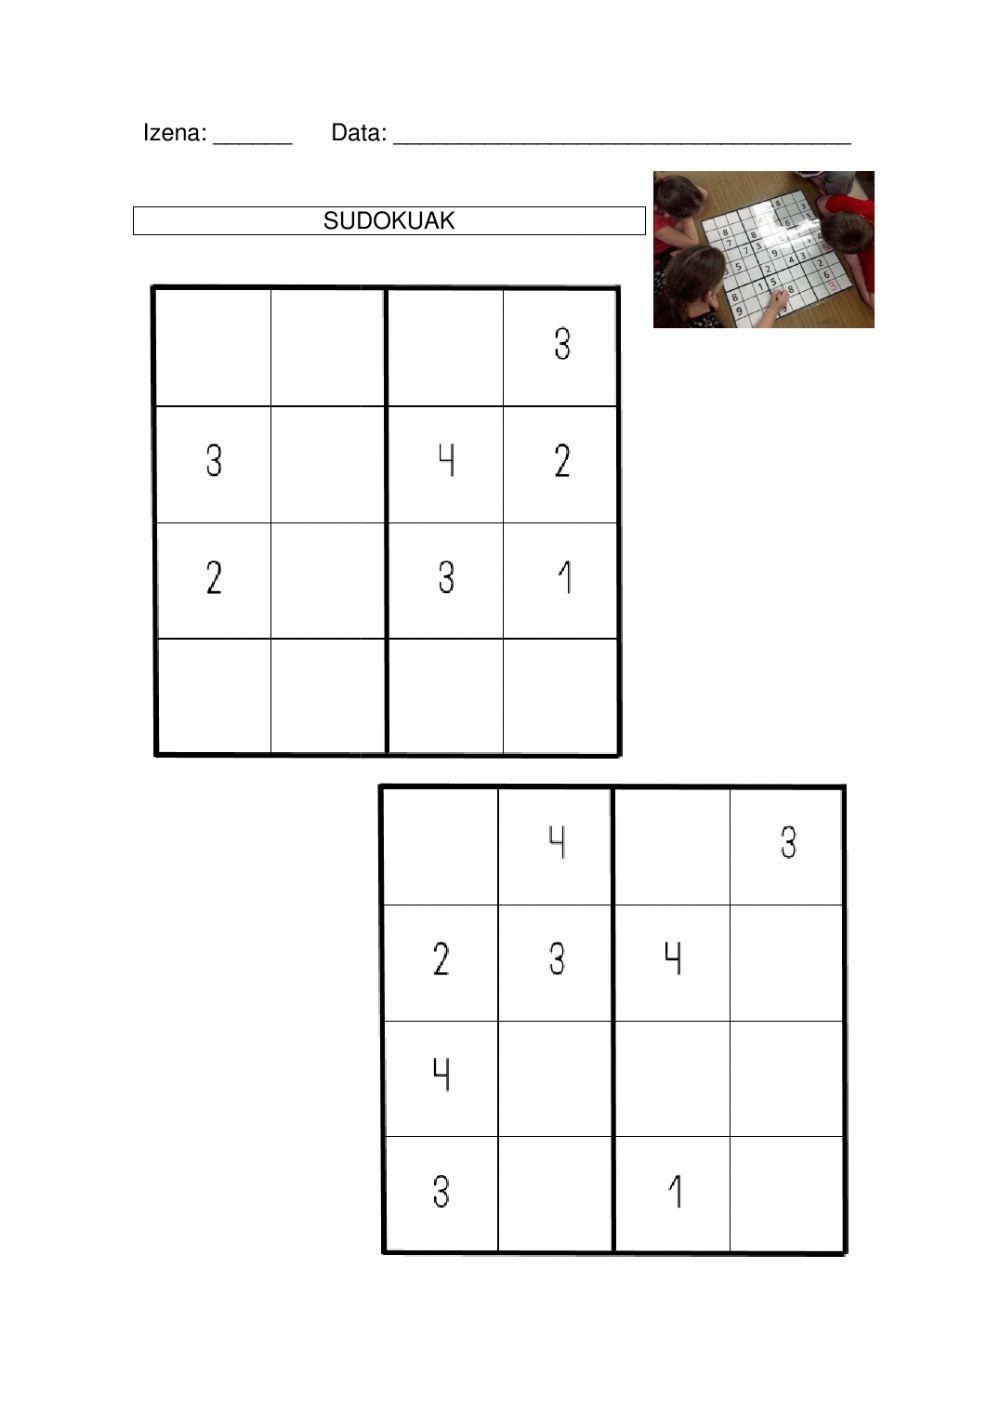 Sudokuak 2